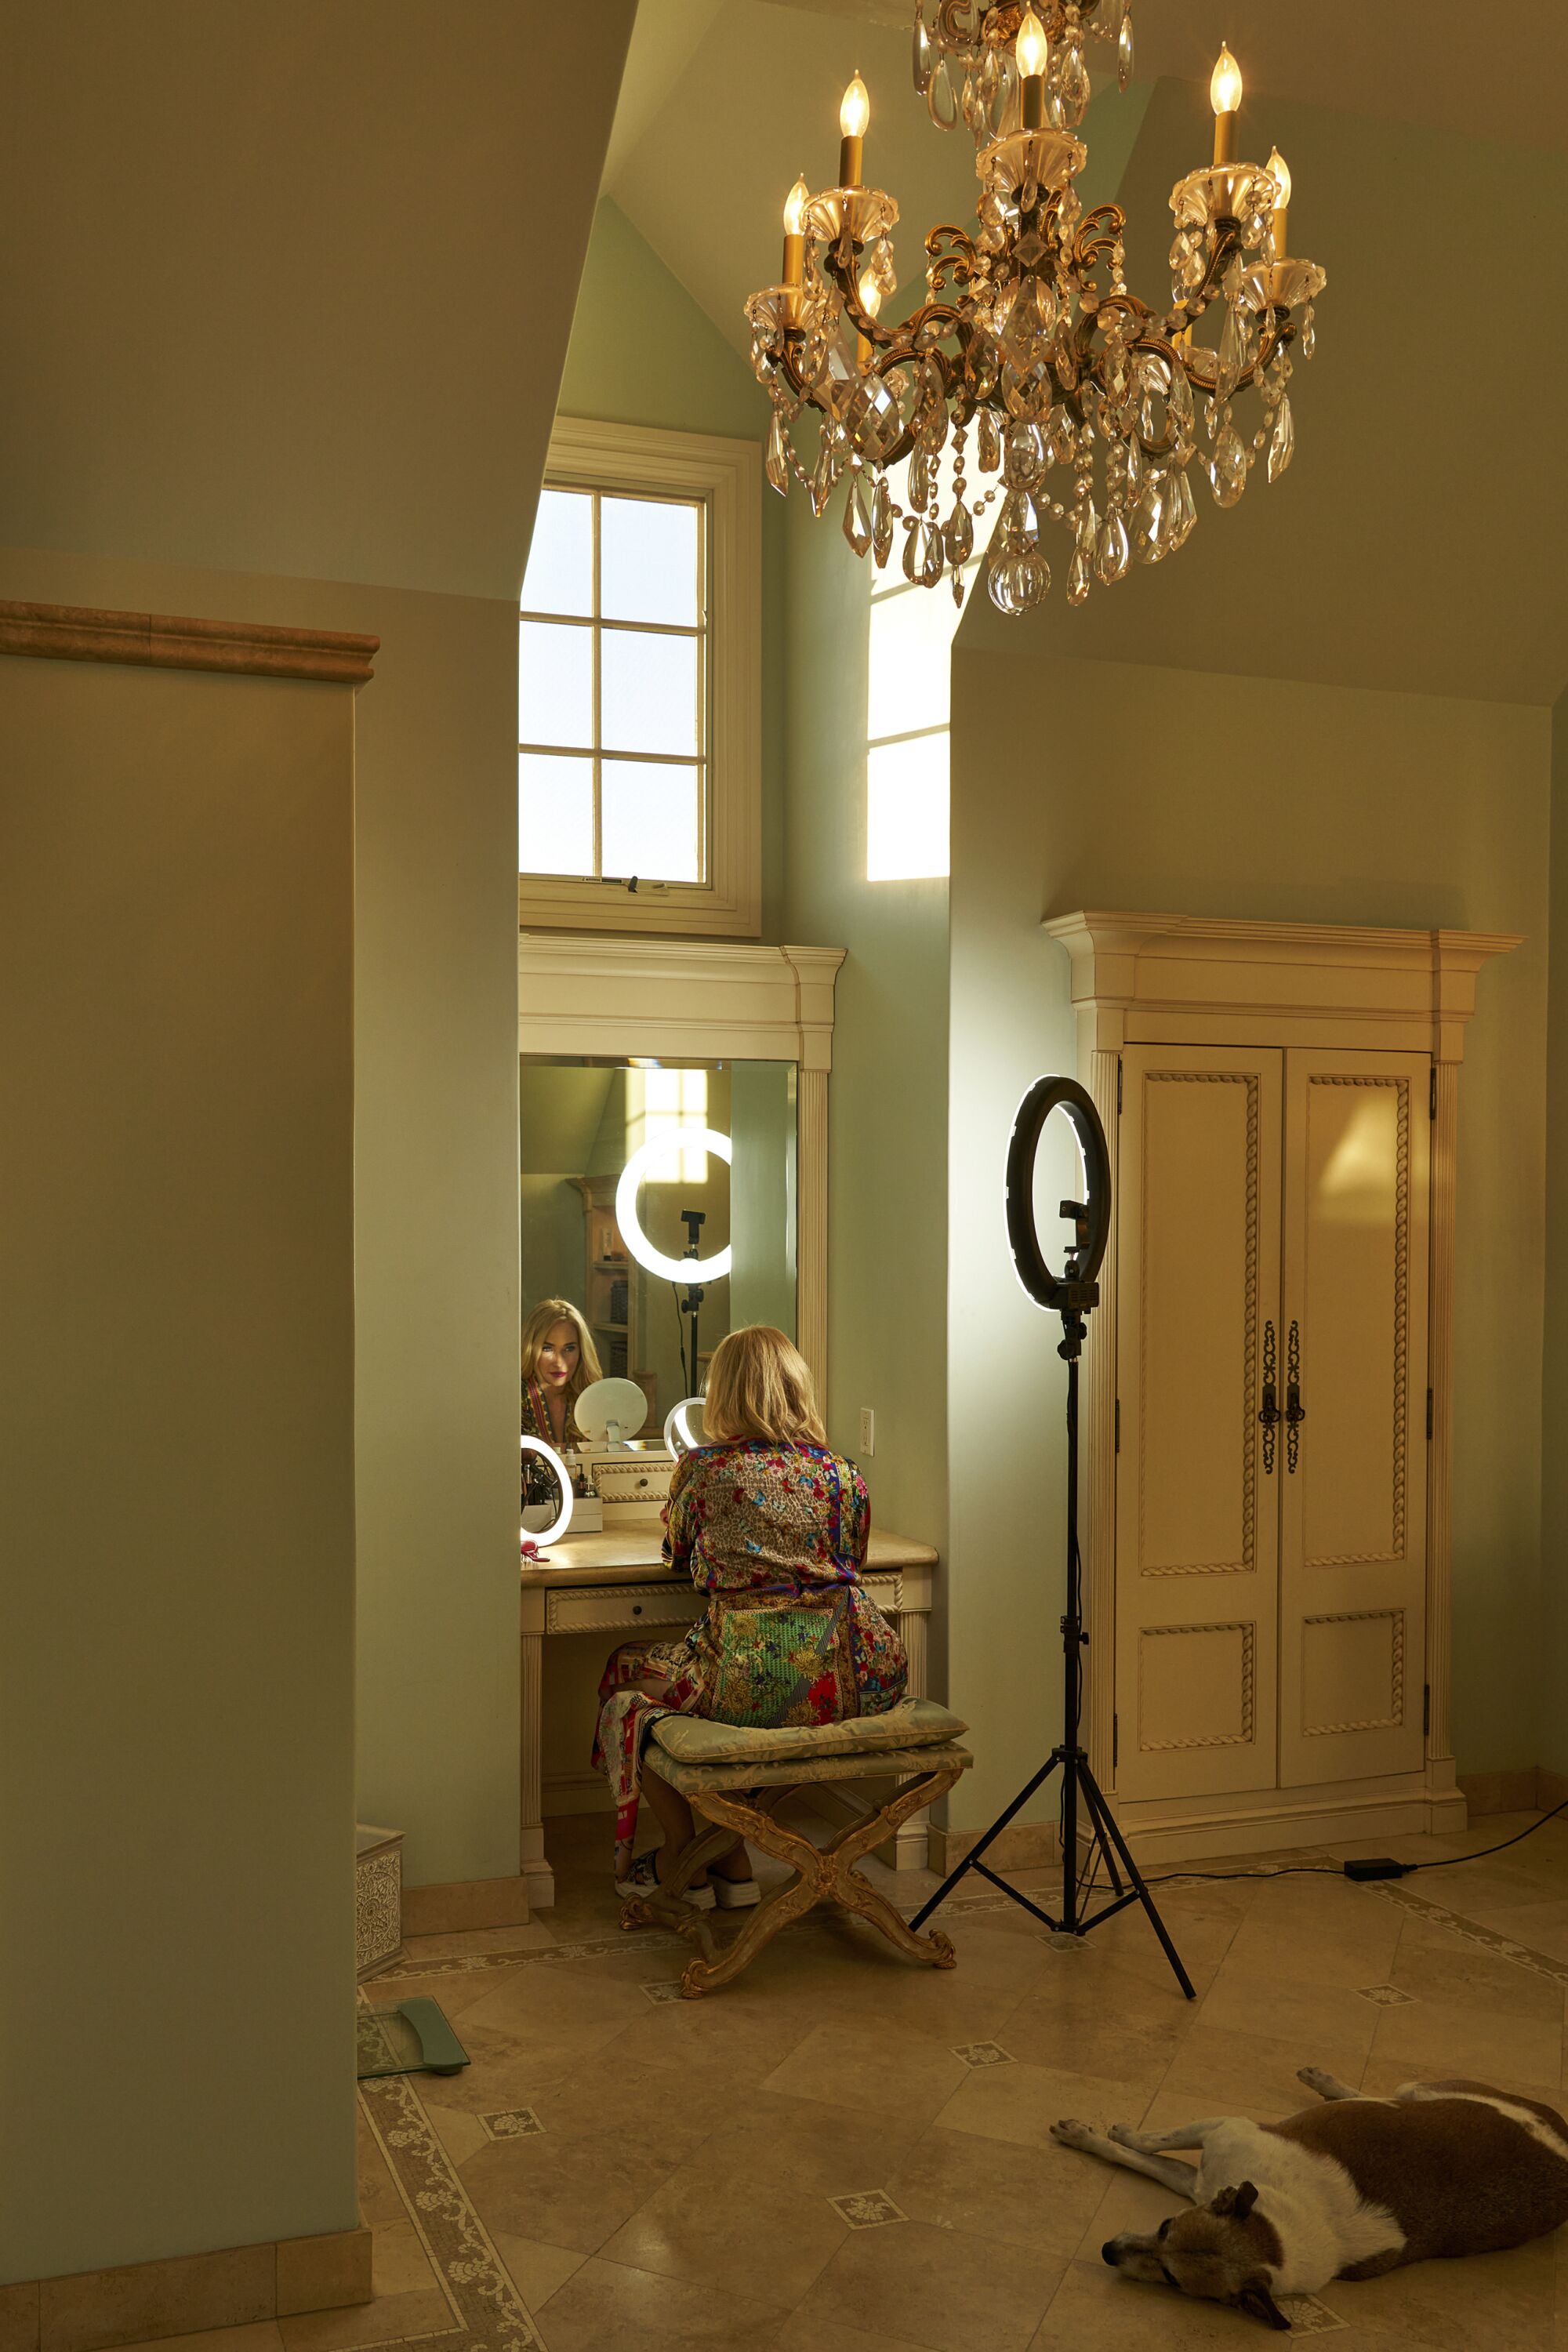 A woman applies makeup in a mirror in a bathroom.